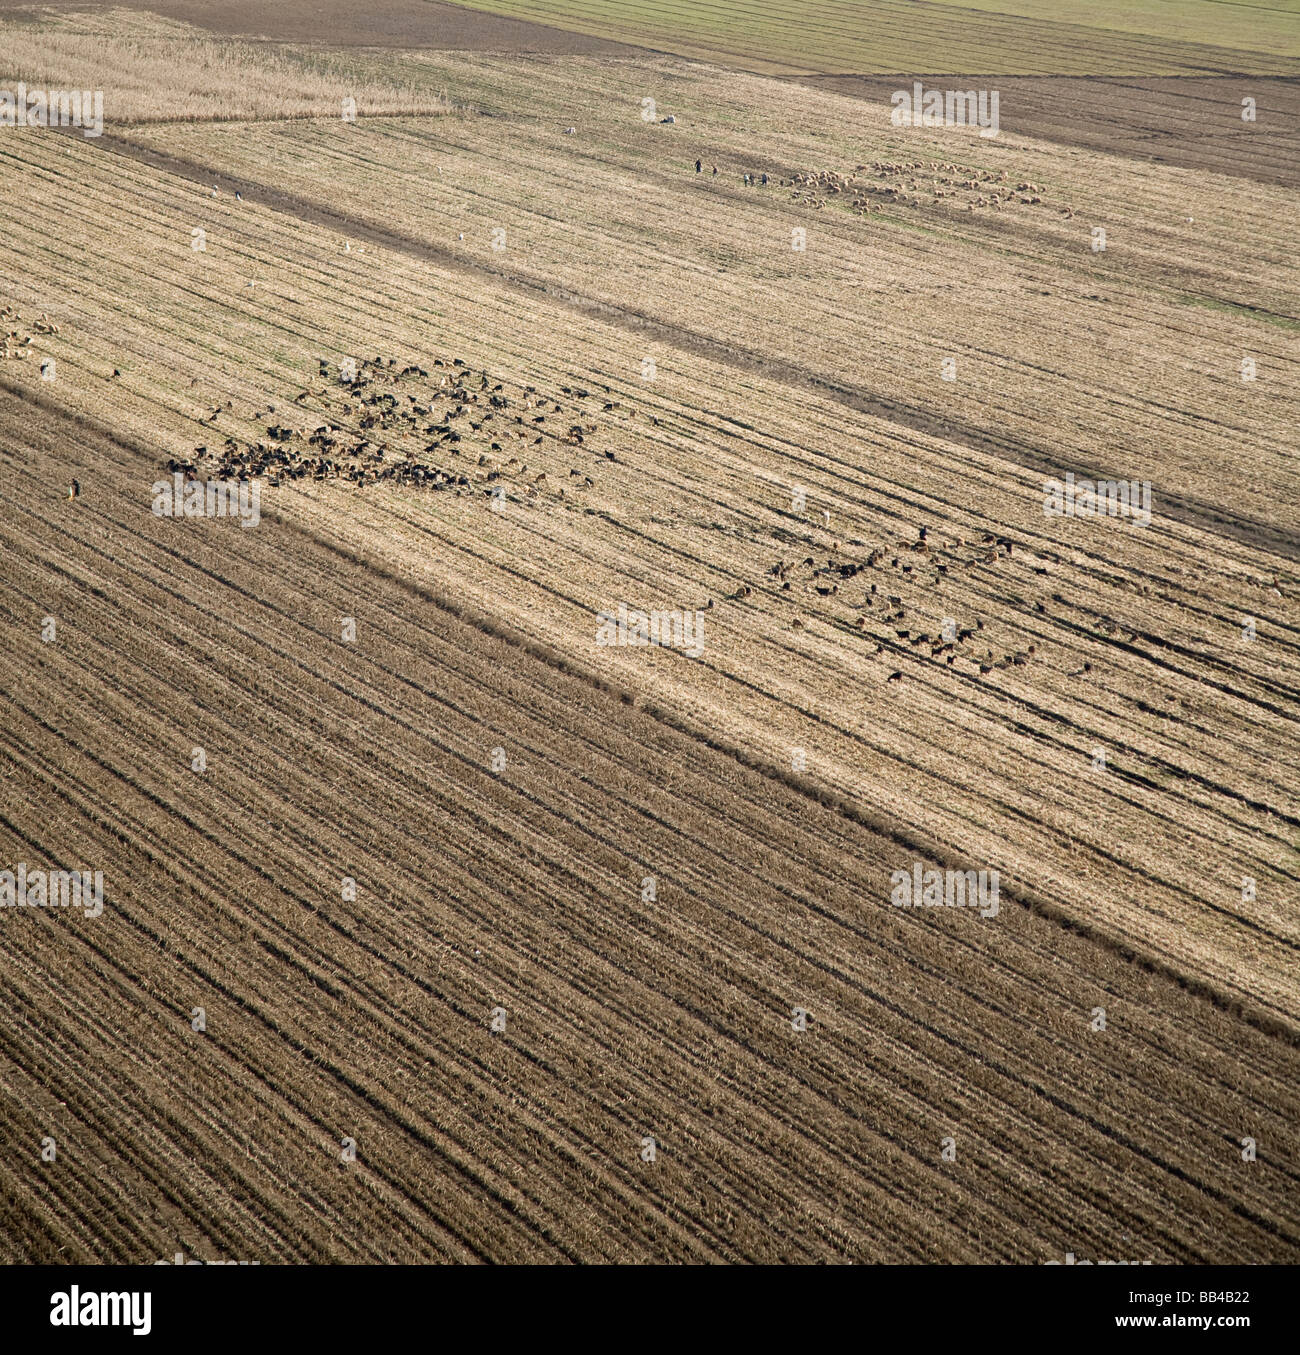 Lifestock in farmland in central Turkey. Stock Photo